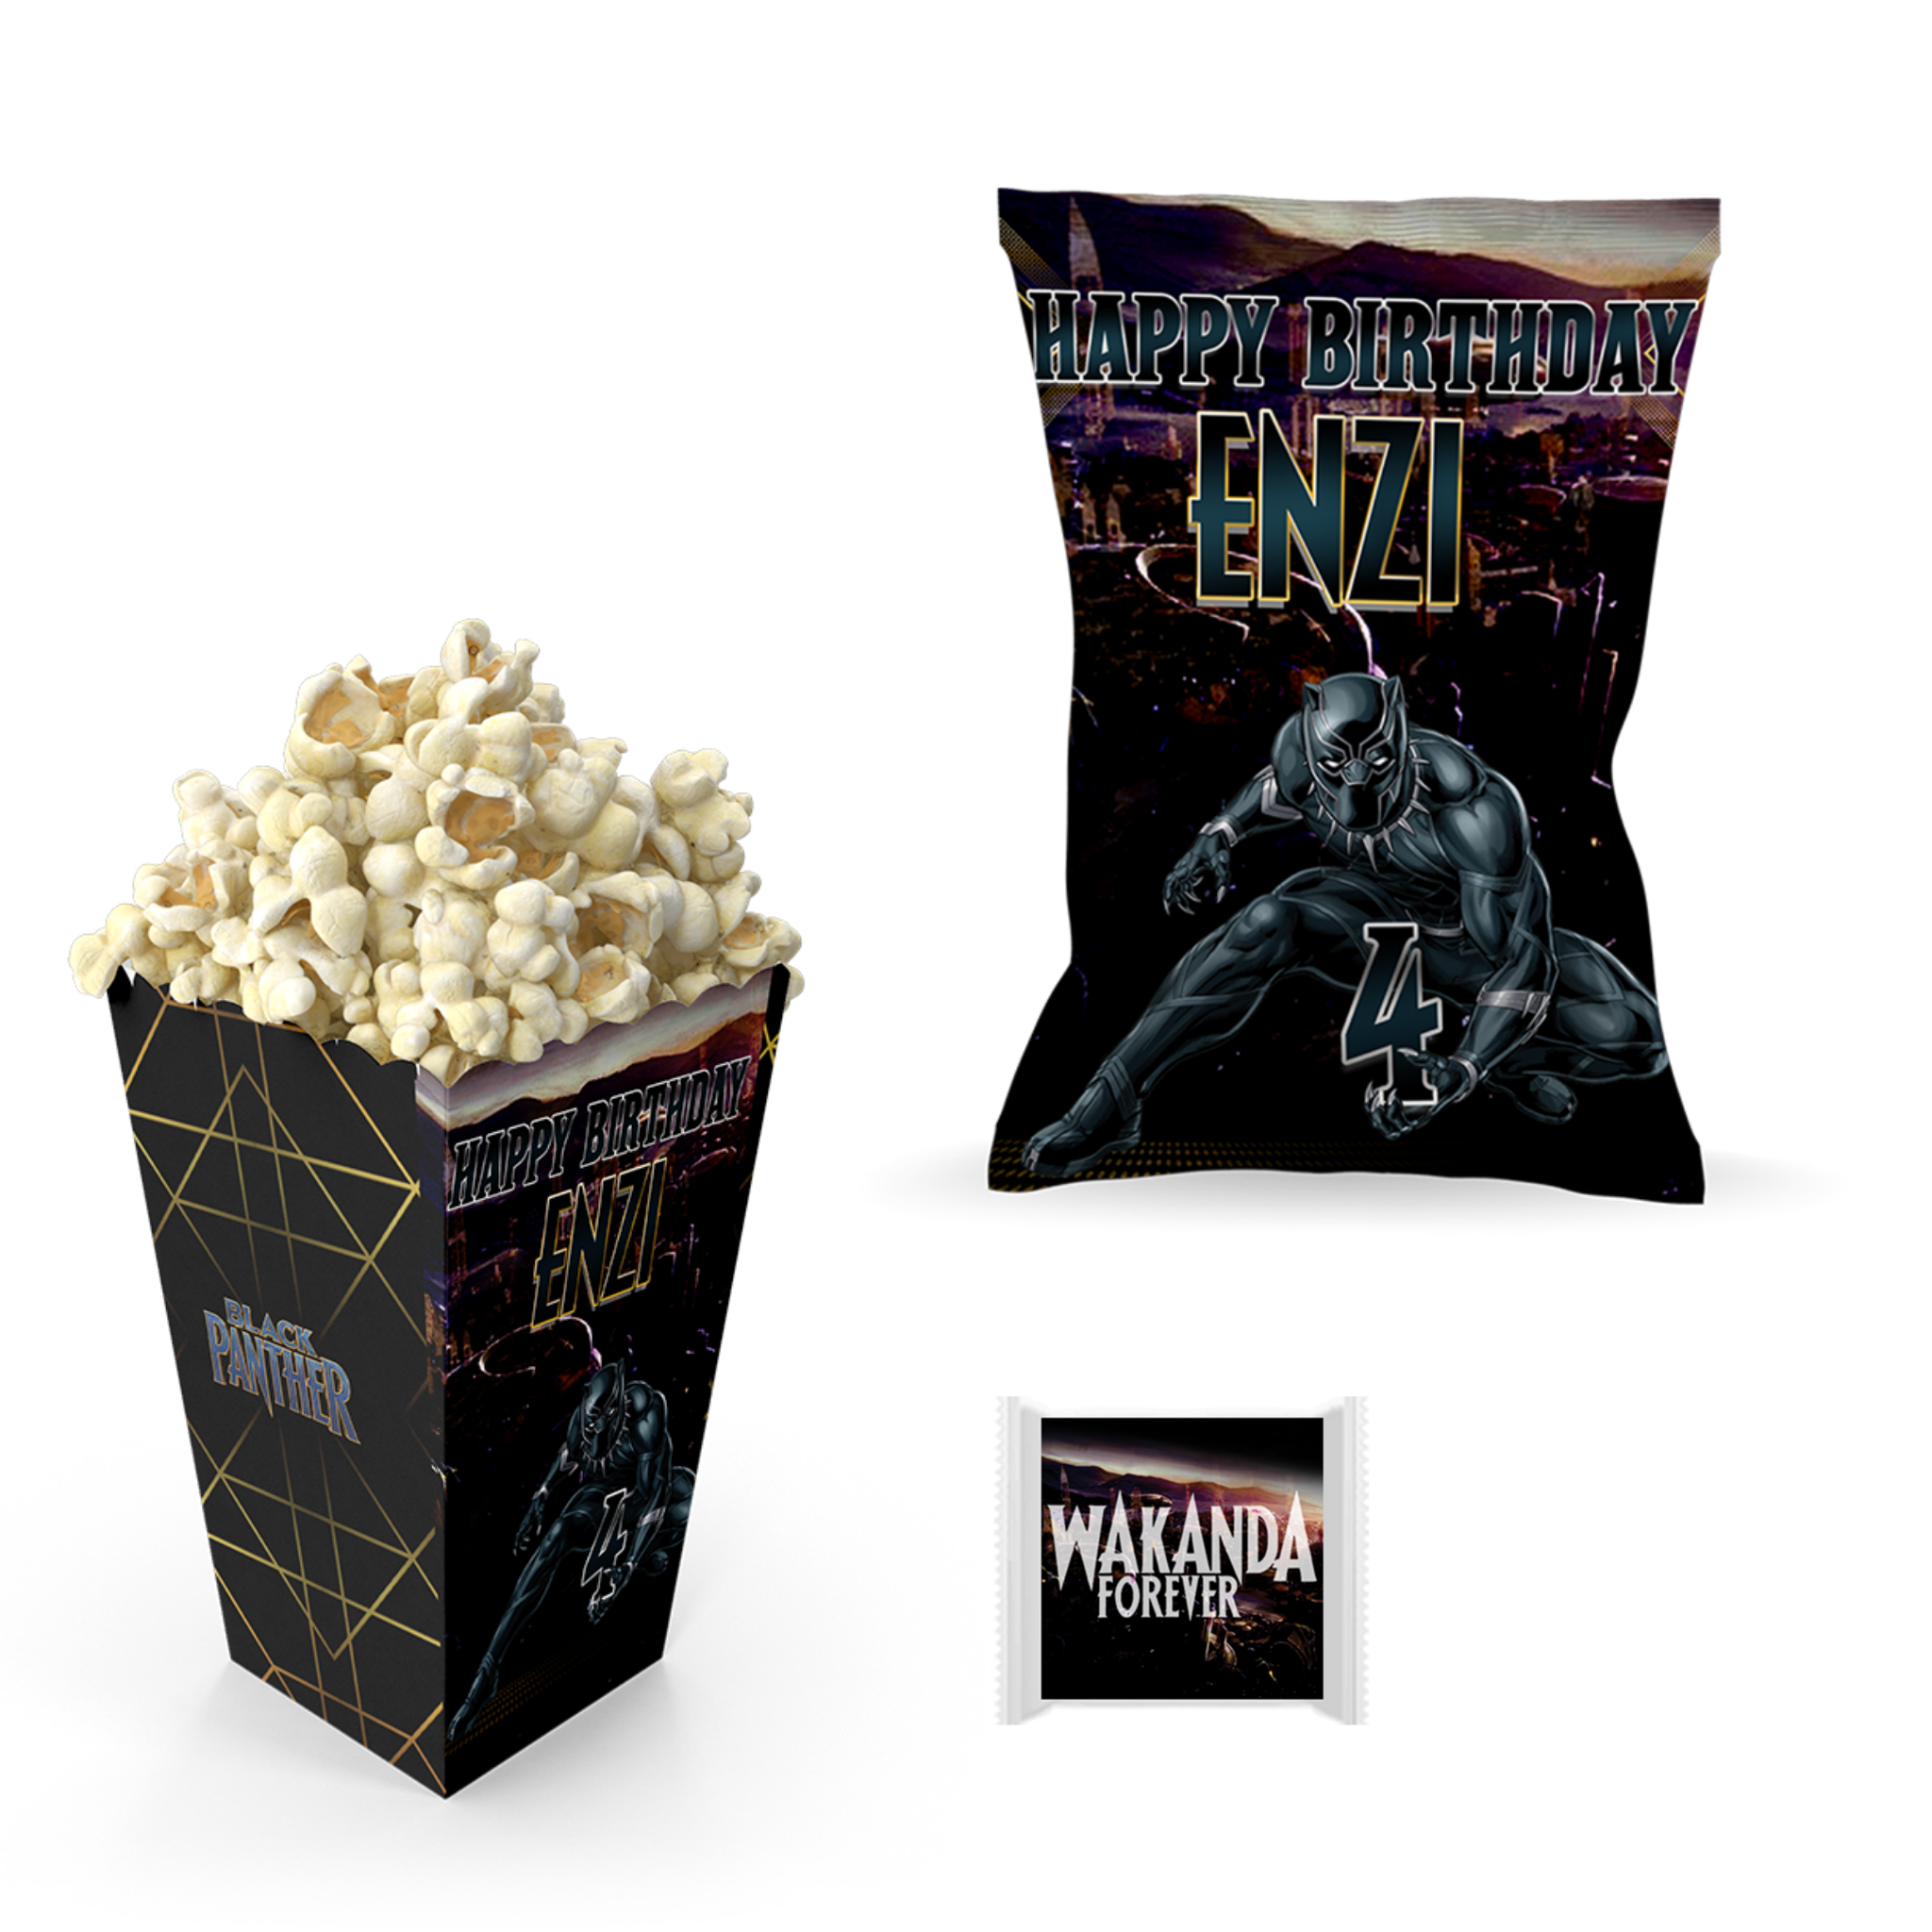 Black Panther popcornbak, chips en stickers